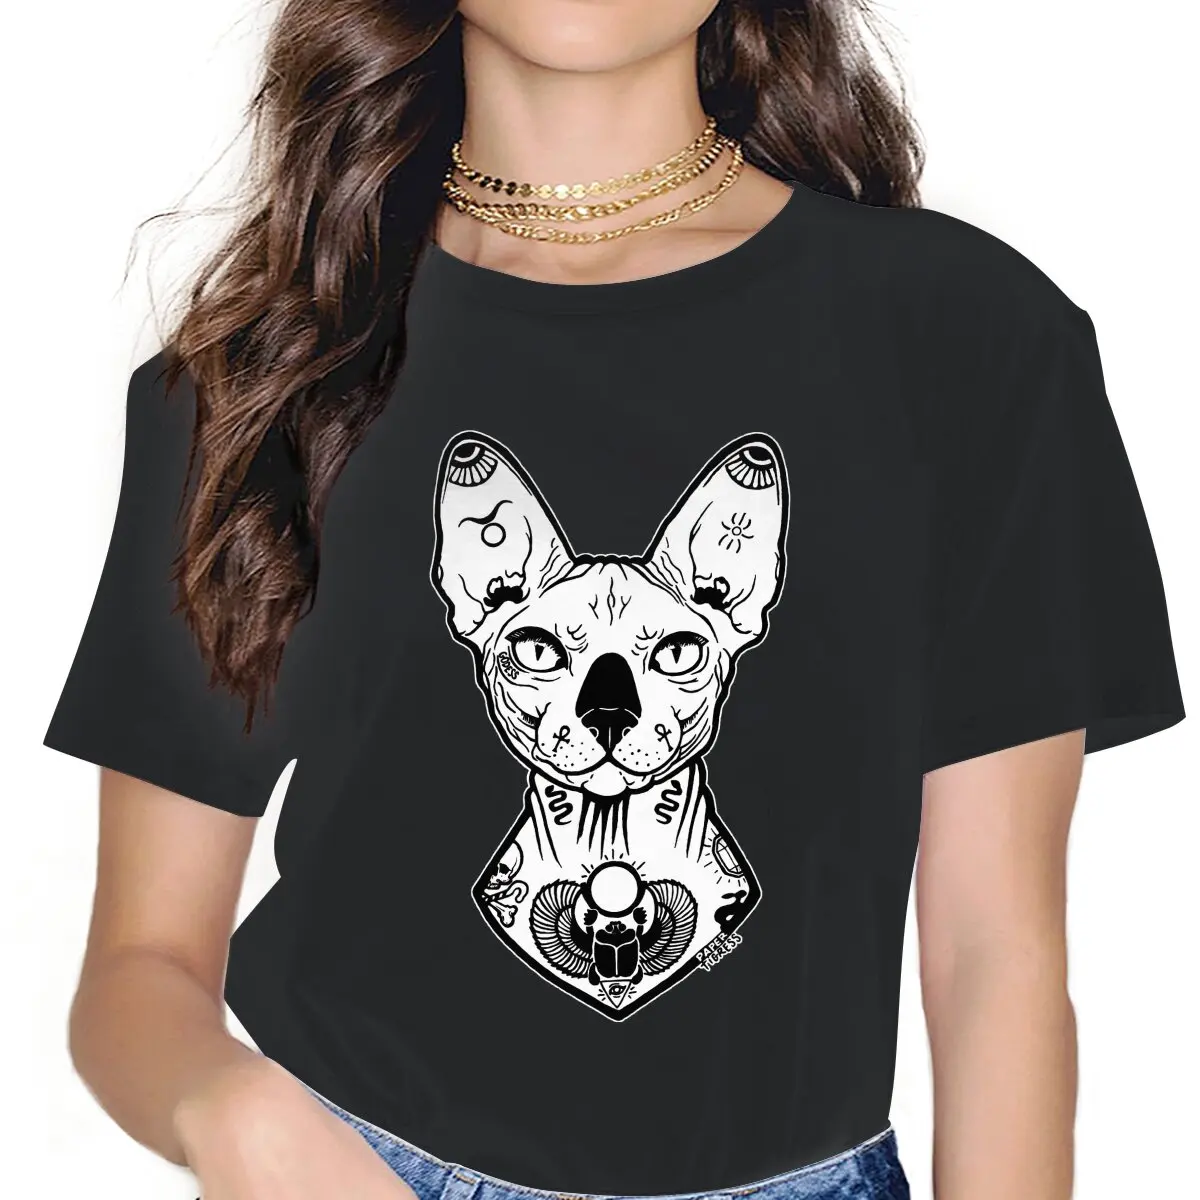 Tattooed Women Tshirts Canadian Sphynx Cat Grunge Vintage Female Clothing Large Cotton Graphic Streetwear